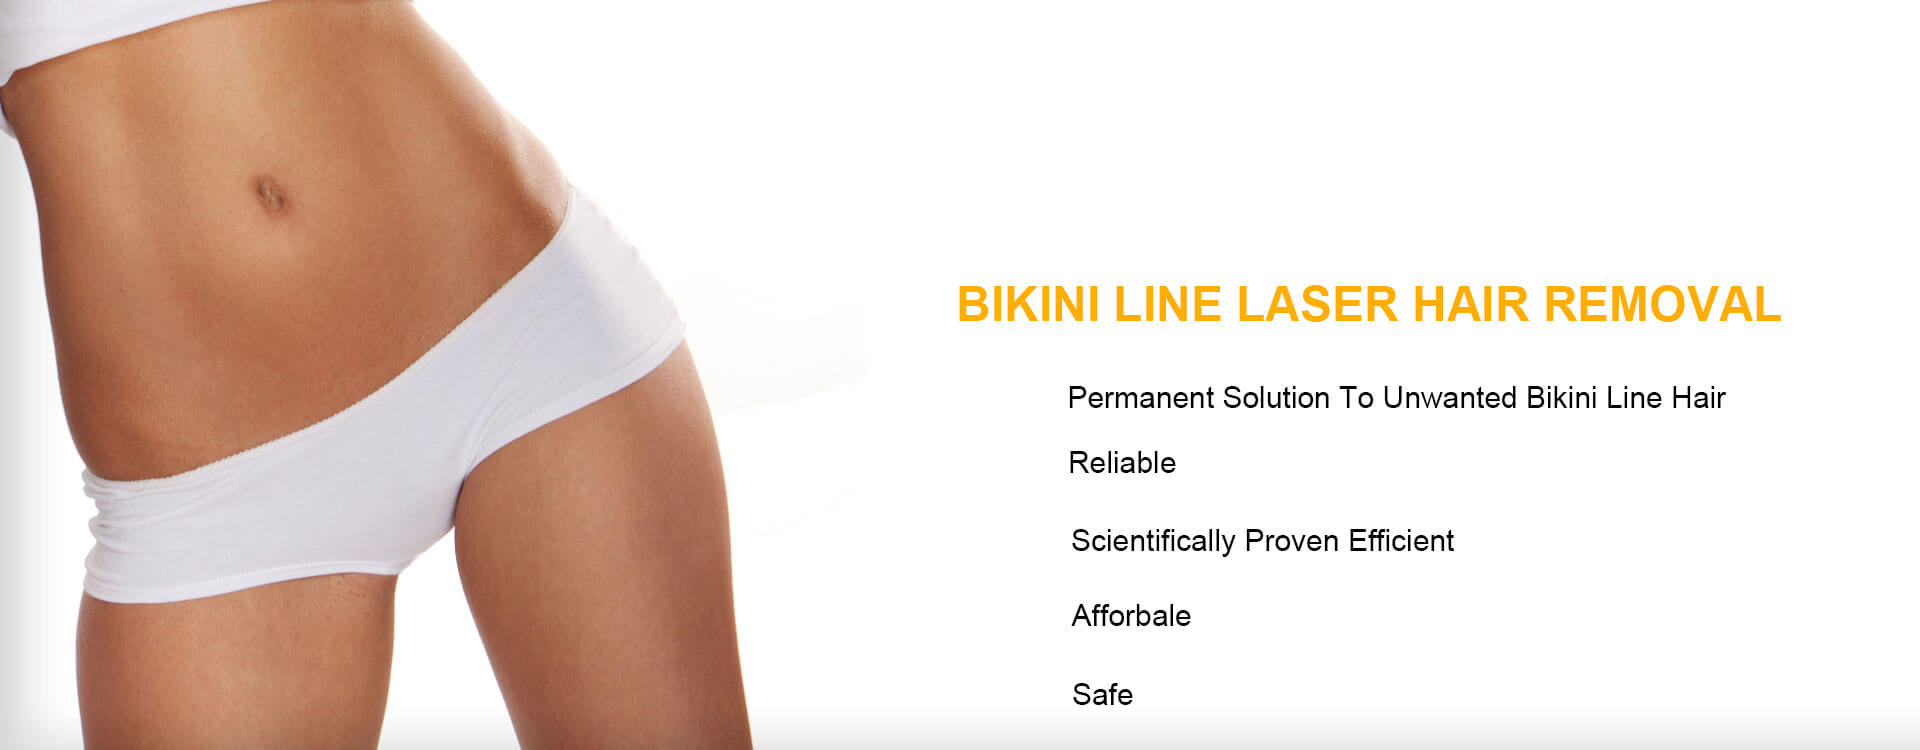 Bikini Line Laser Hair Removal